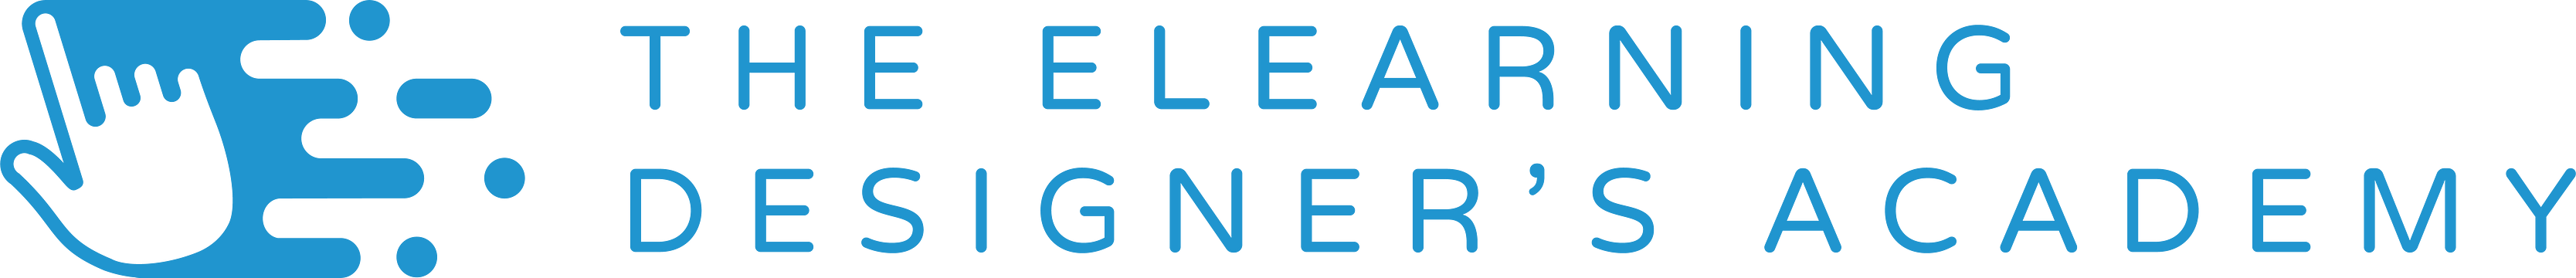 The eLearning Designer's Academy logo